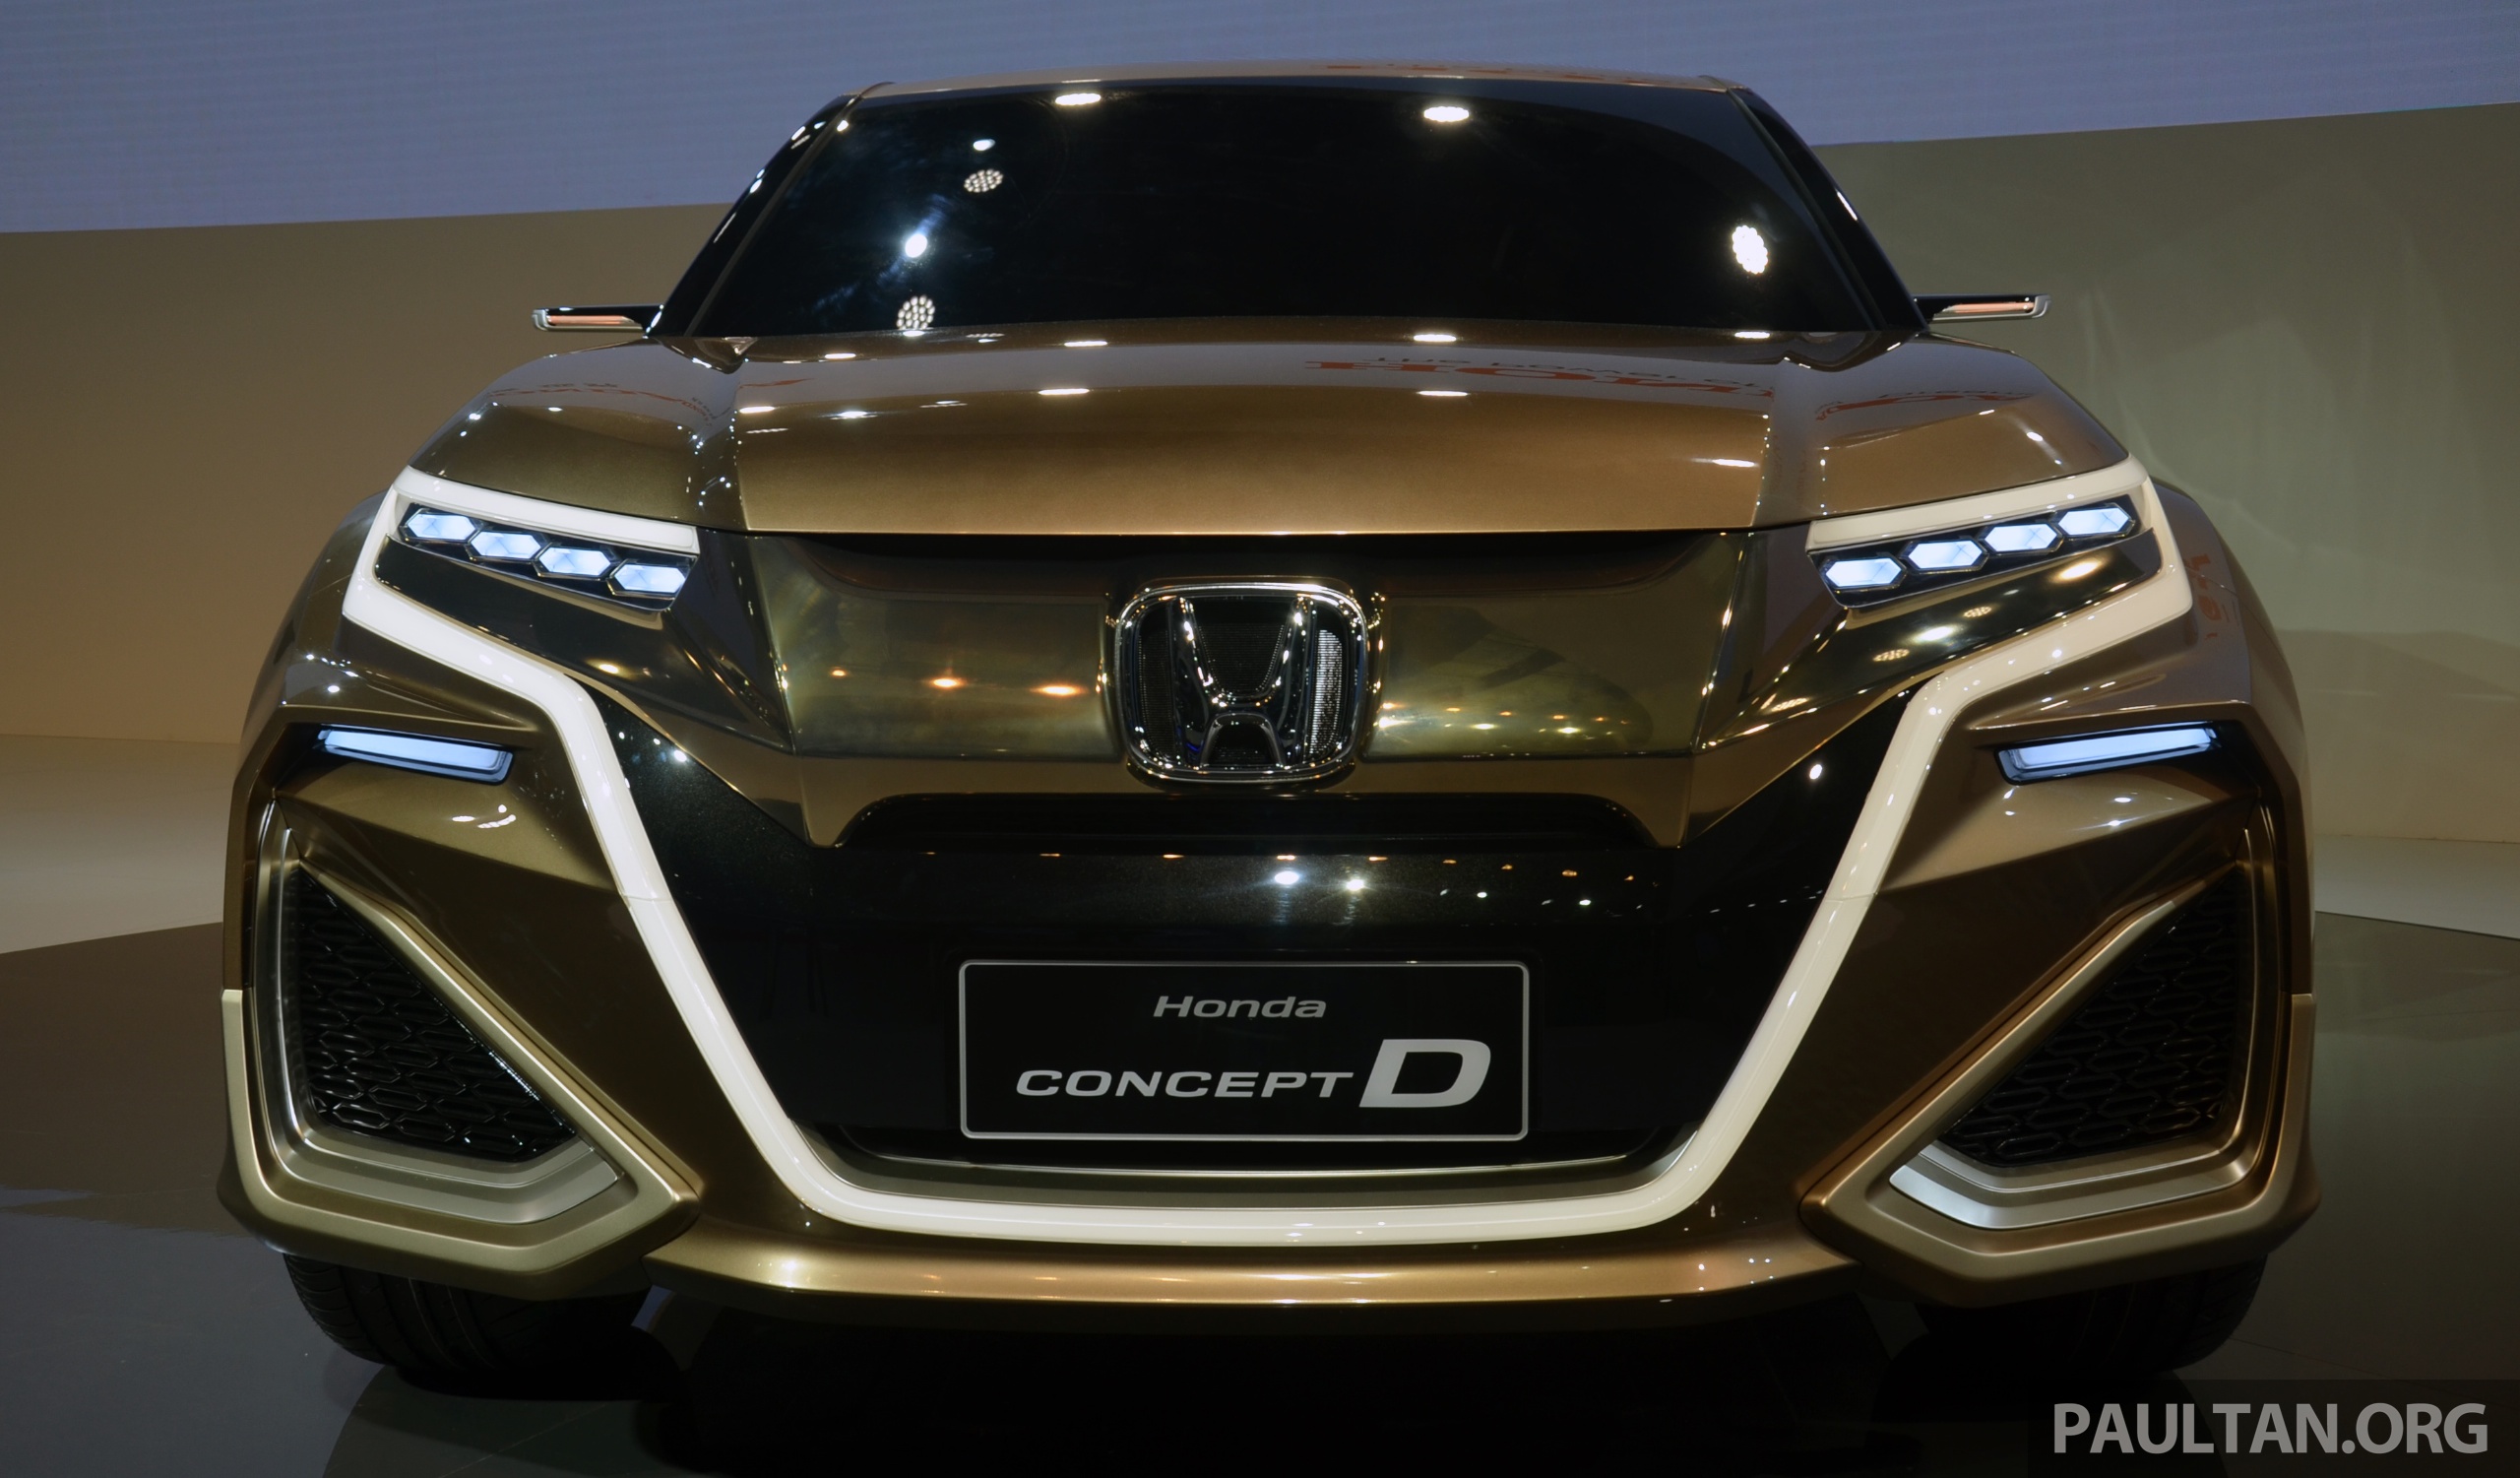 Honda Concept D Backgrounds on Wallpapers Vista